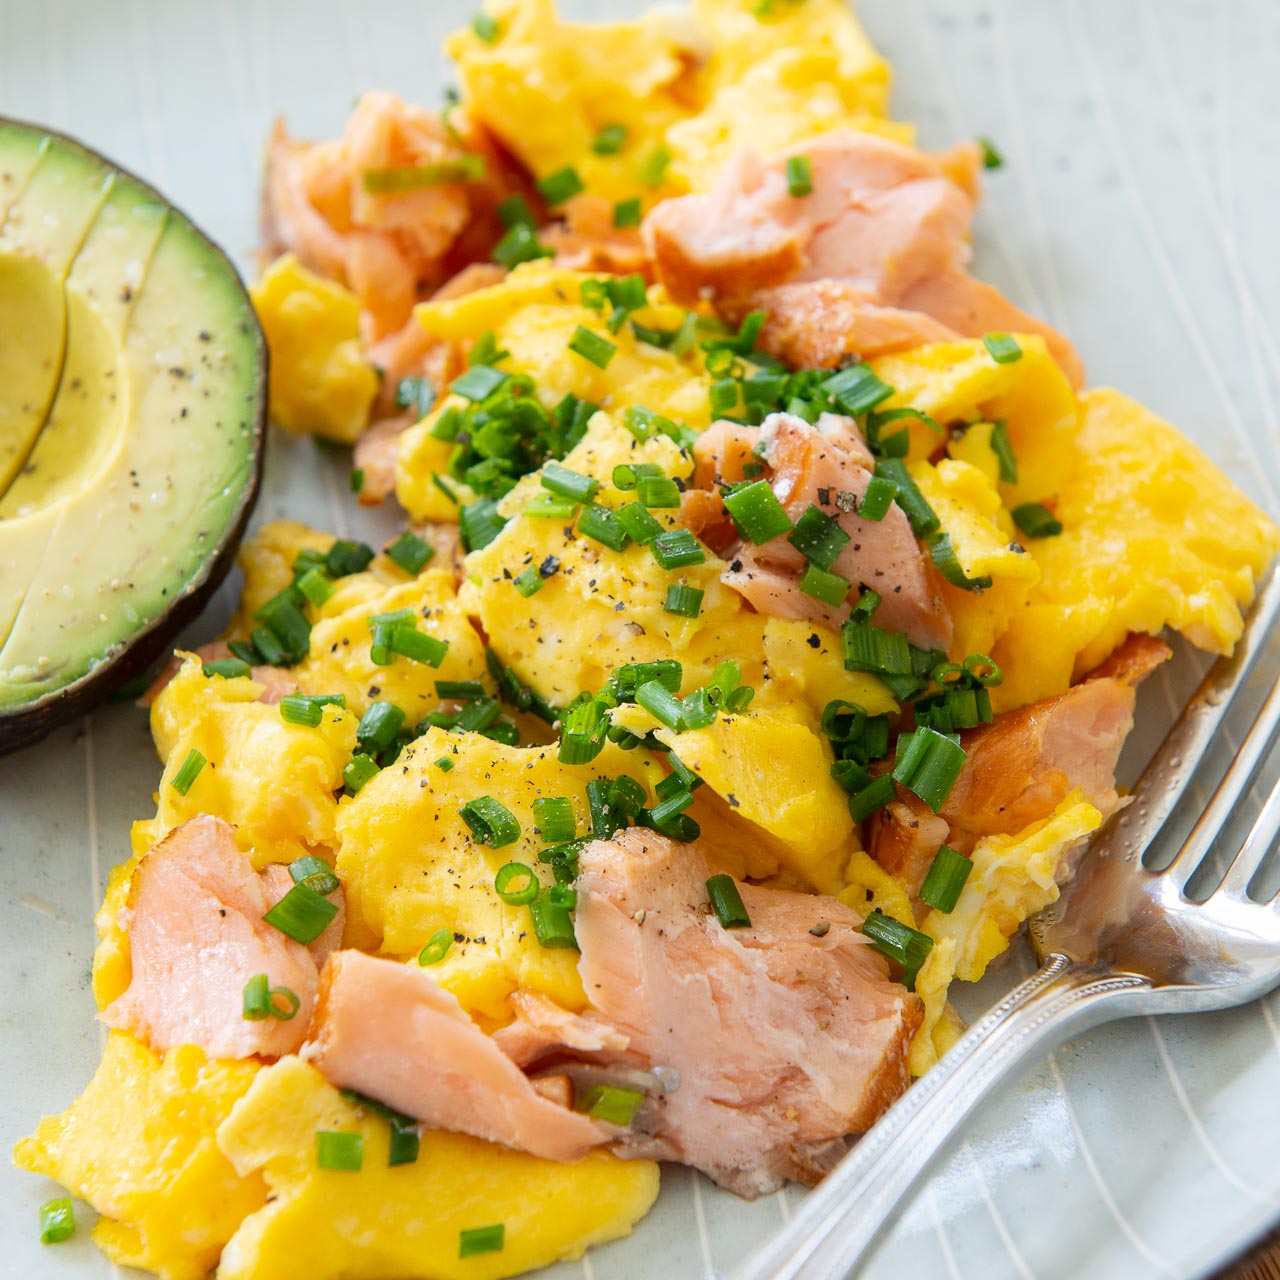 Salmon and Eggs - My Favorite Simple, Healthy Breakfast Recipe